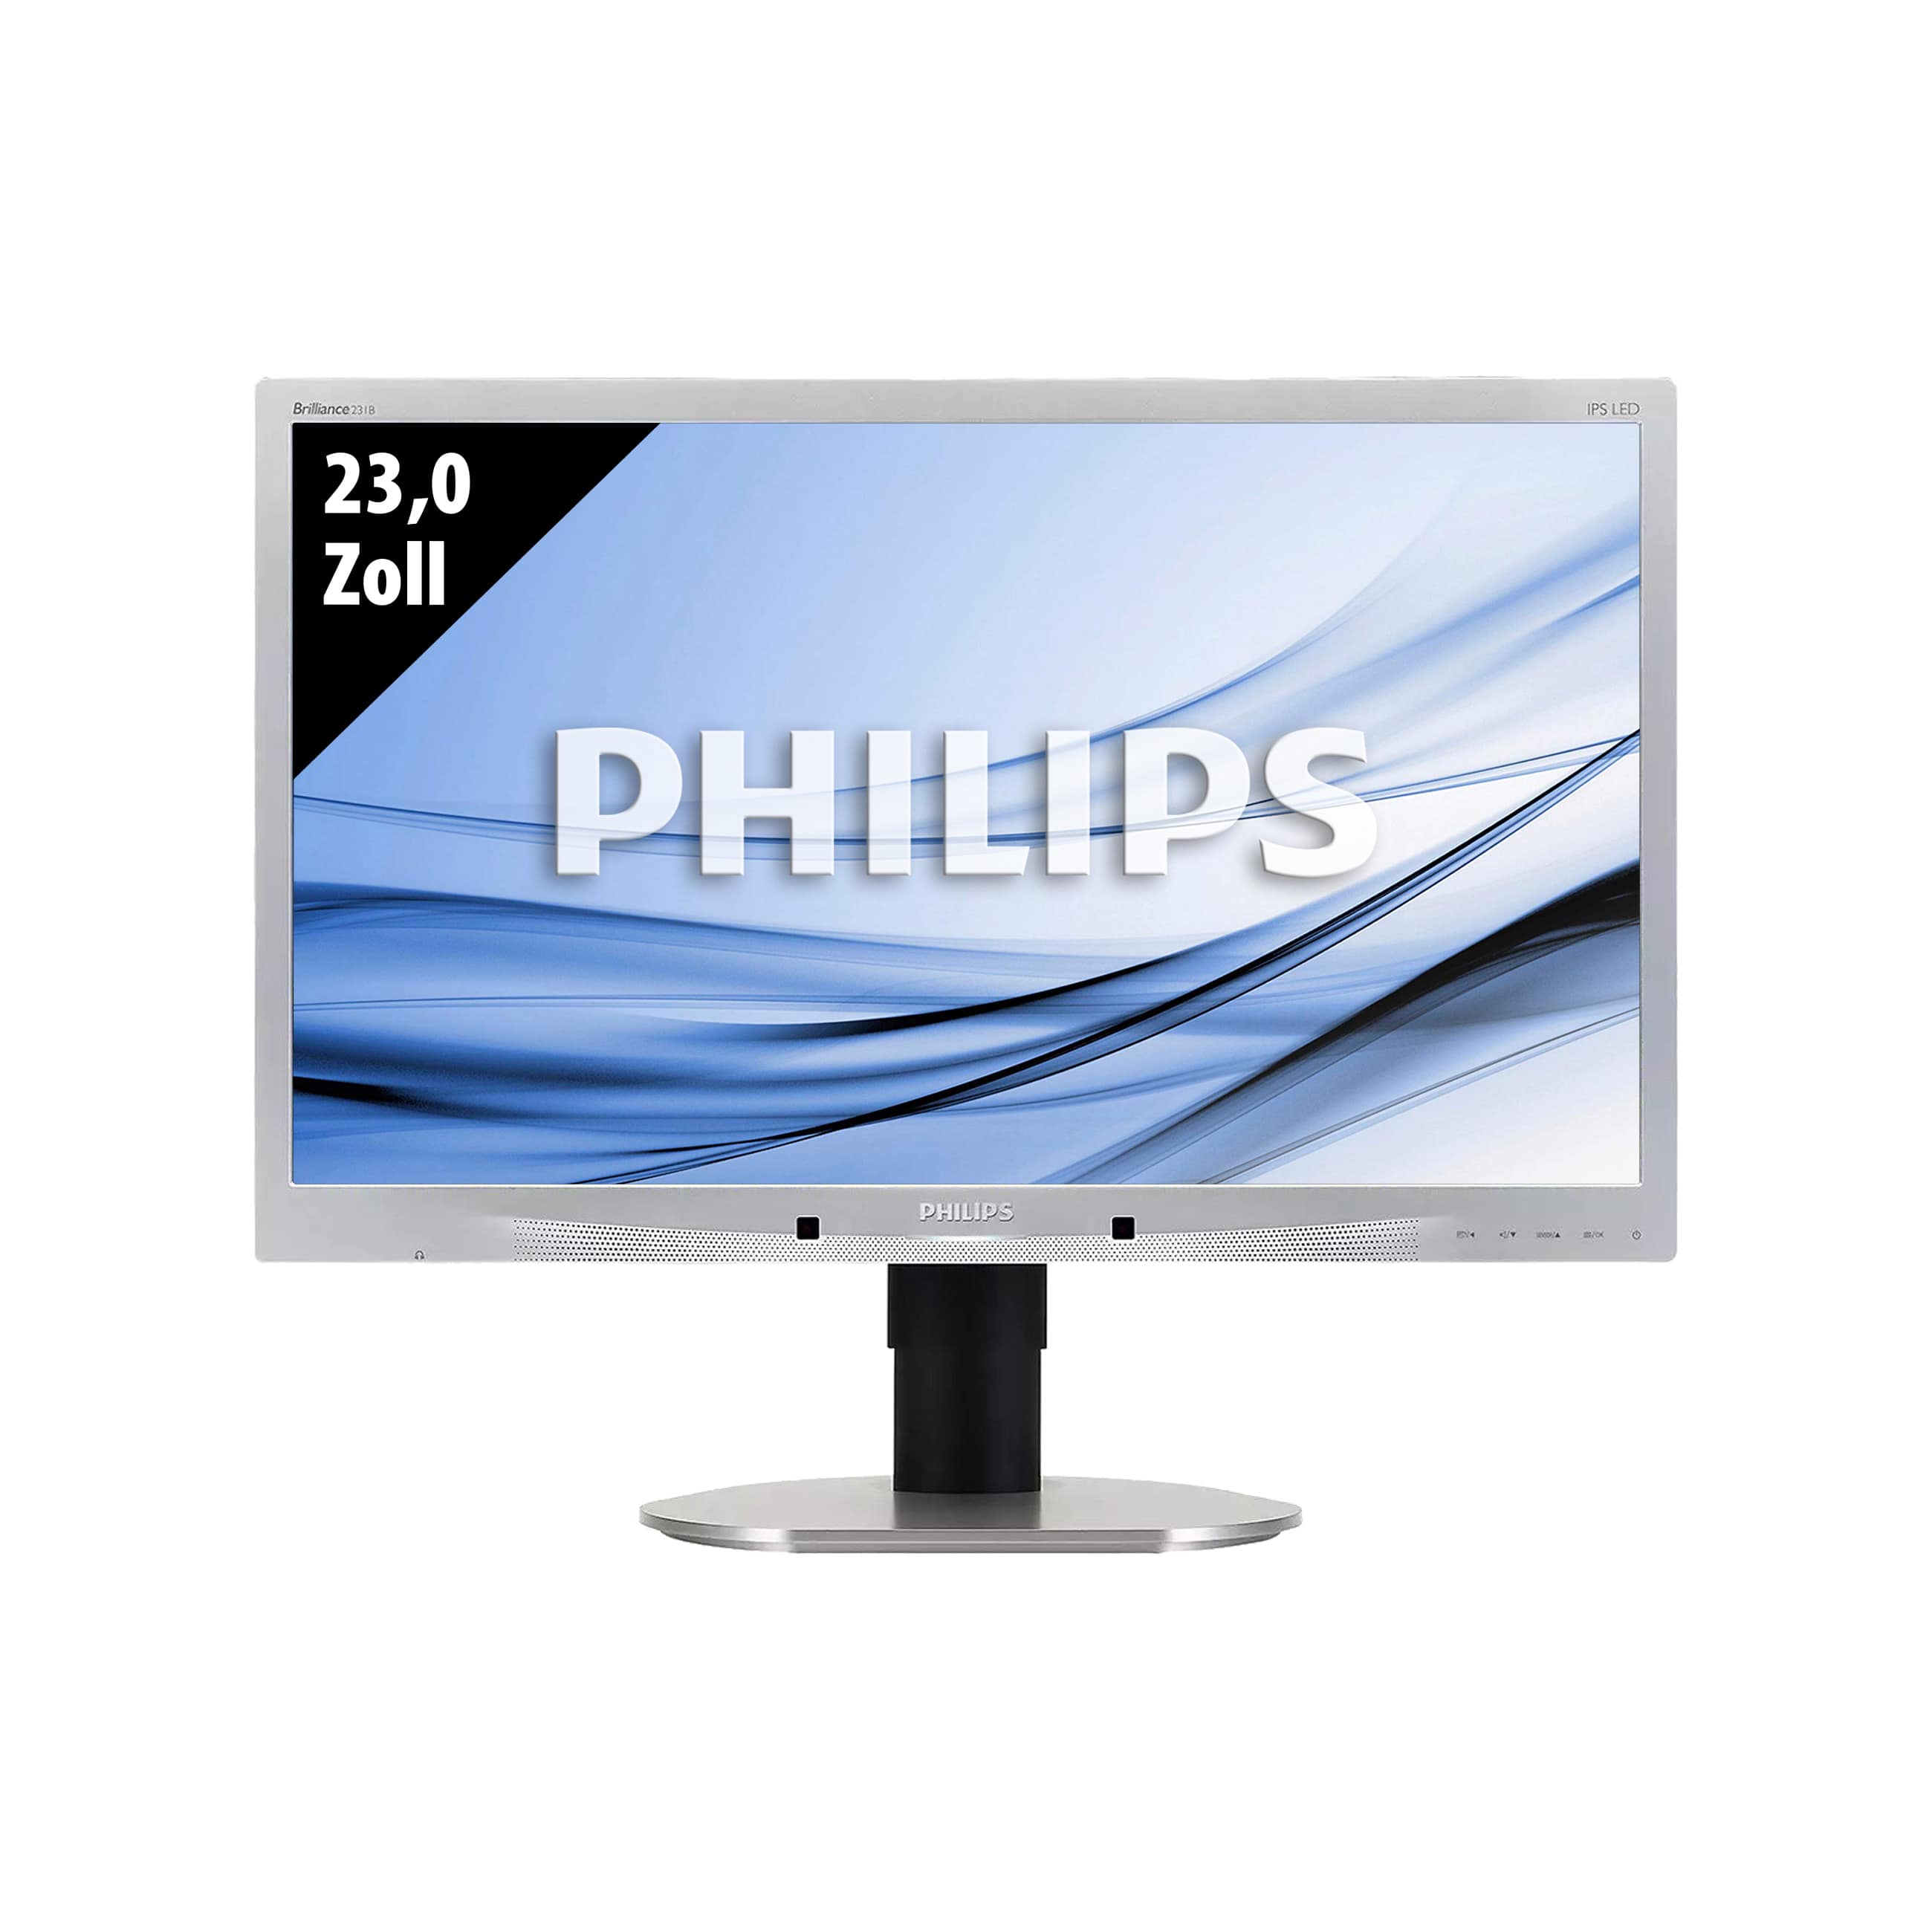 Philips Brilliance 231B4QPYCS - 1920 x 1080 - FHD - 23,0 Zoll - 14 ms - Silber